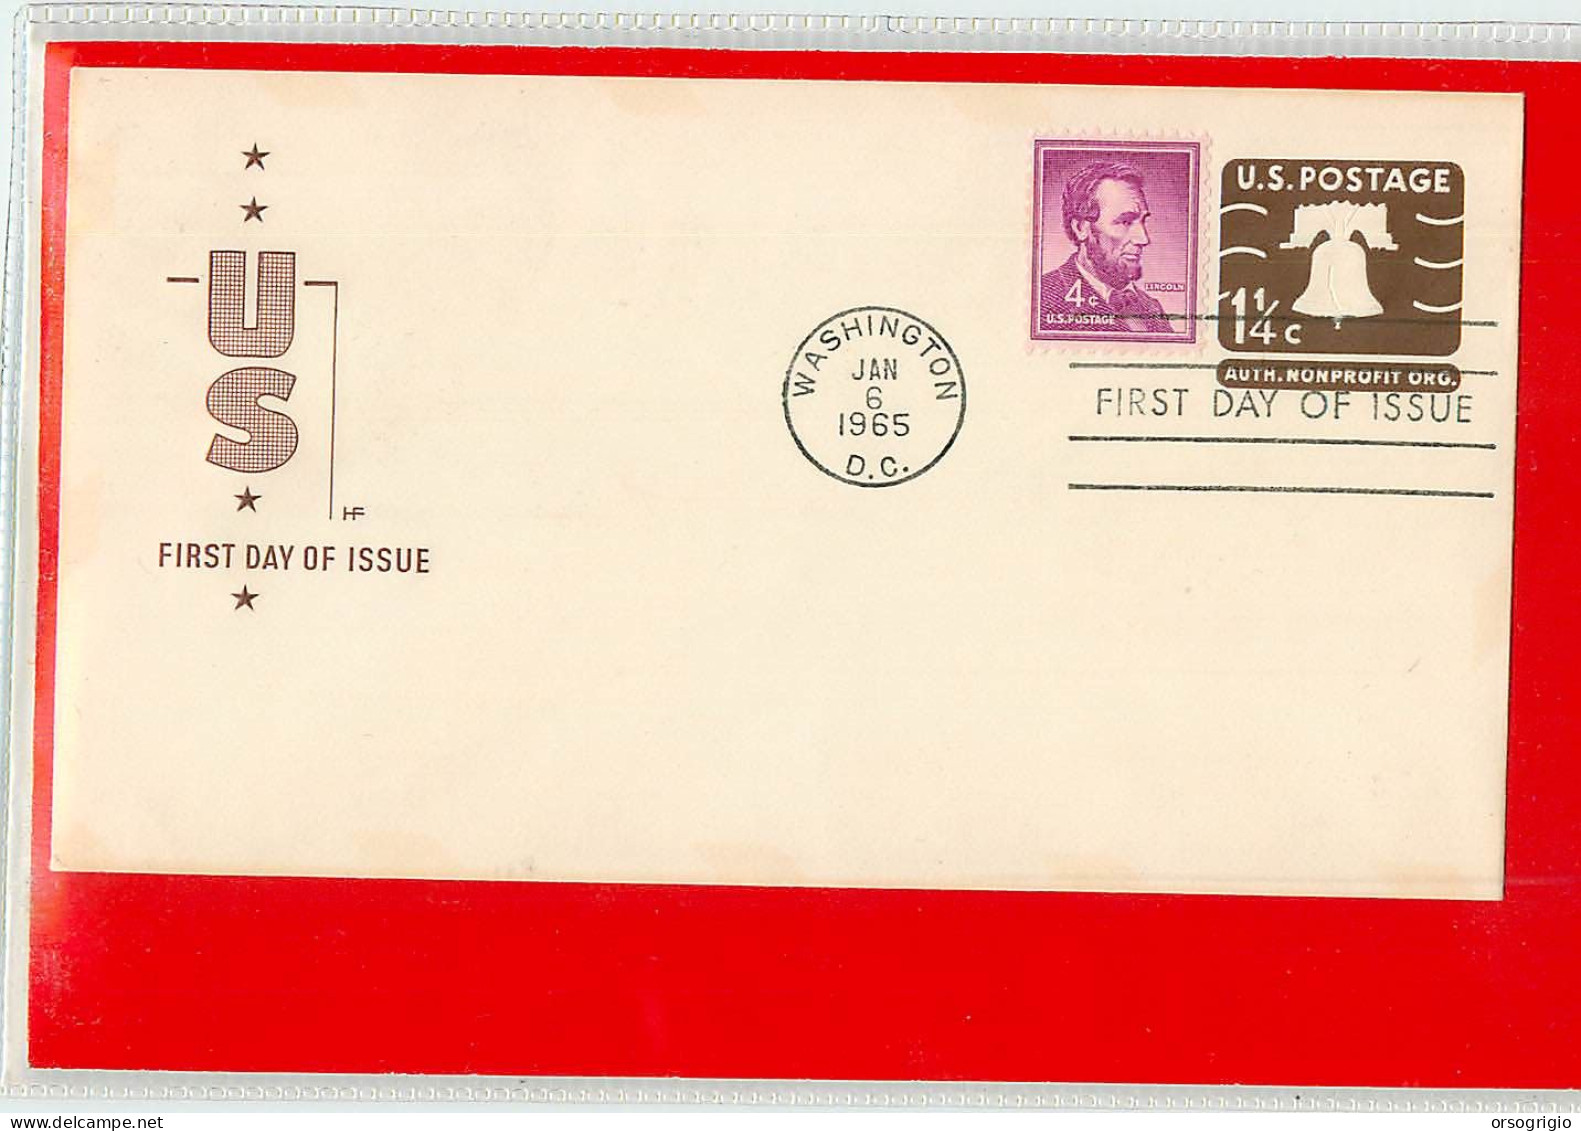 USA - EMBOSSED STAMPED ENVELOPE - FDC 1968 1.4c. - 1961-80